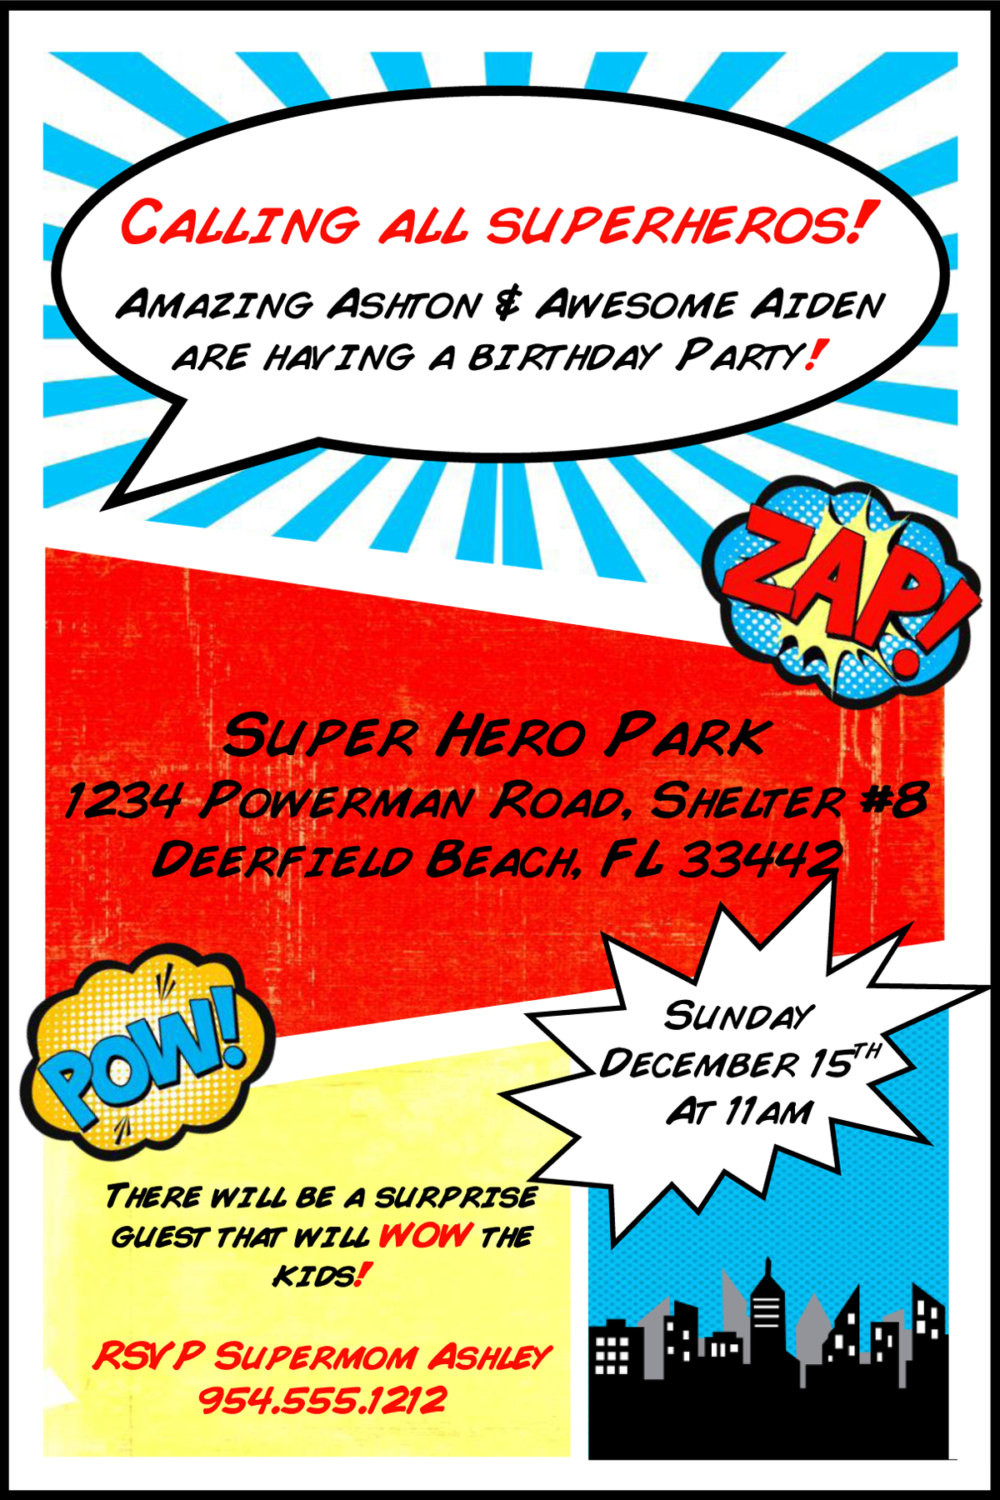 Best ideas about Superhero Birthday Invitations Templates Free
. Save or Pin Superhero Birthday Invitation Template Now.